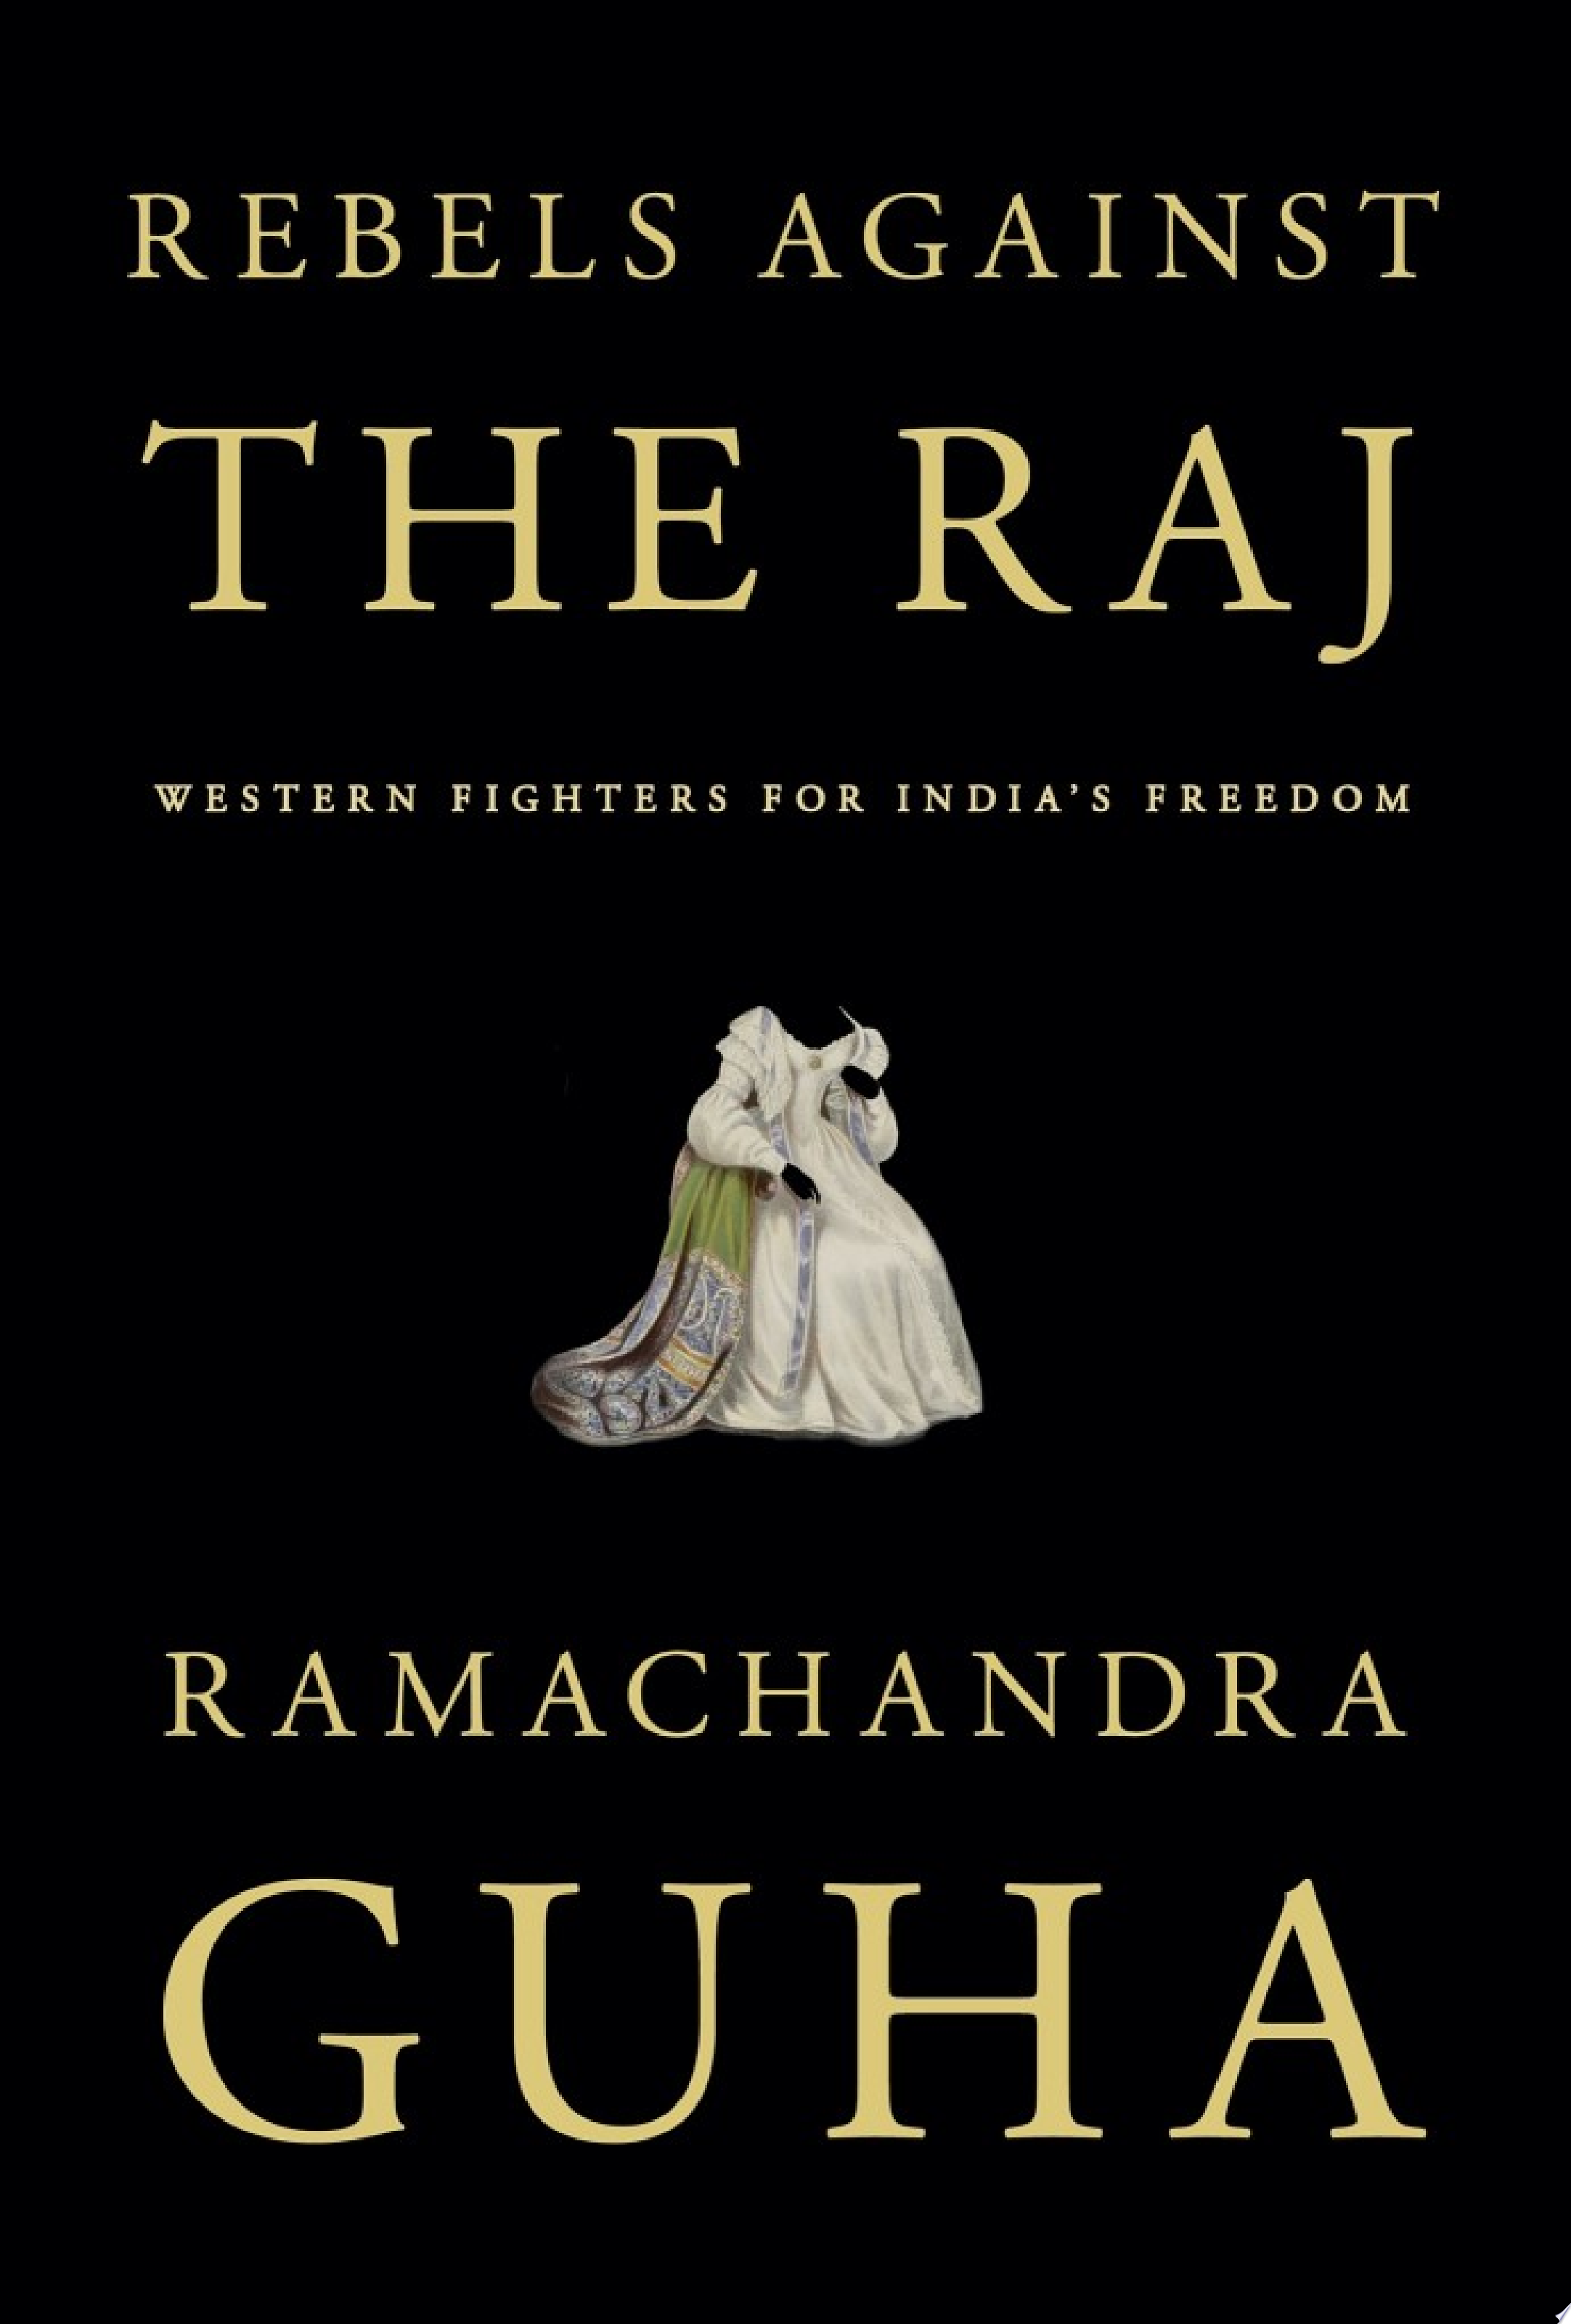 Image for "Rebels Against the Raj"